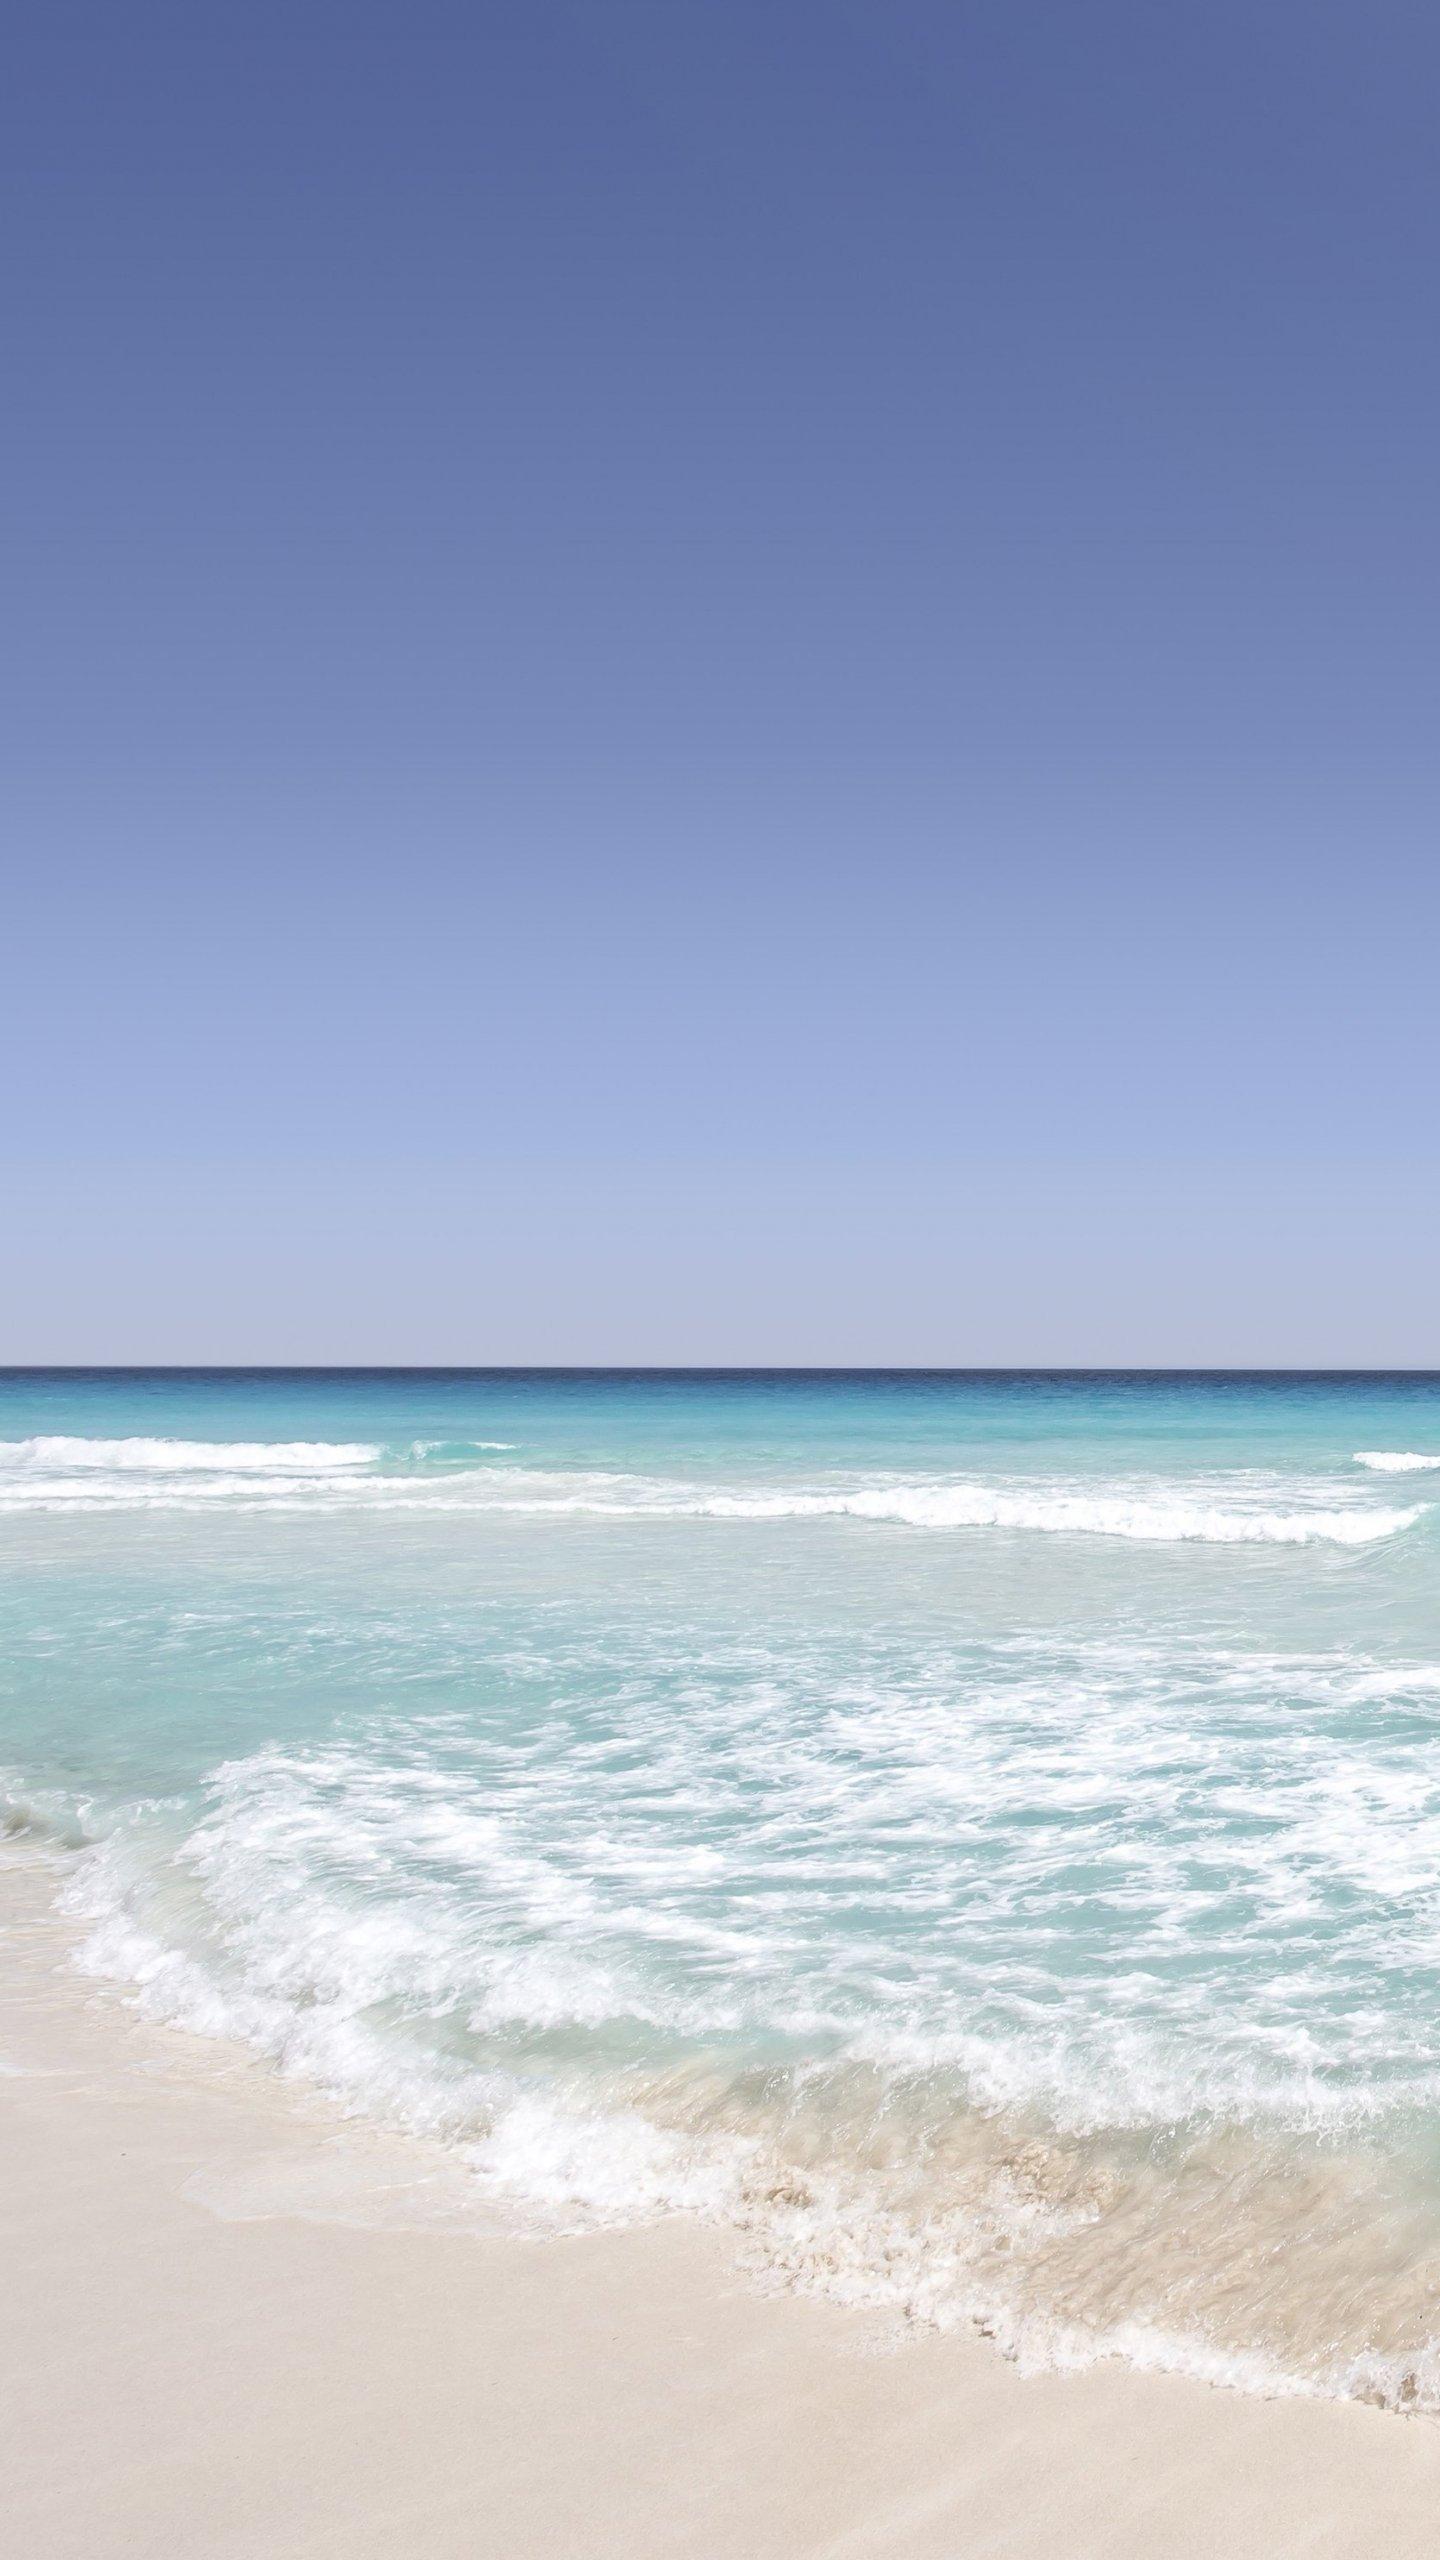 Tropical Sandy Beach Wallpaper, Android & Desktop Background